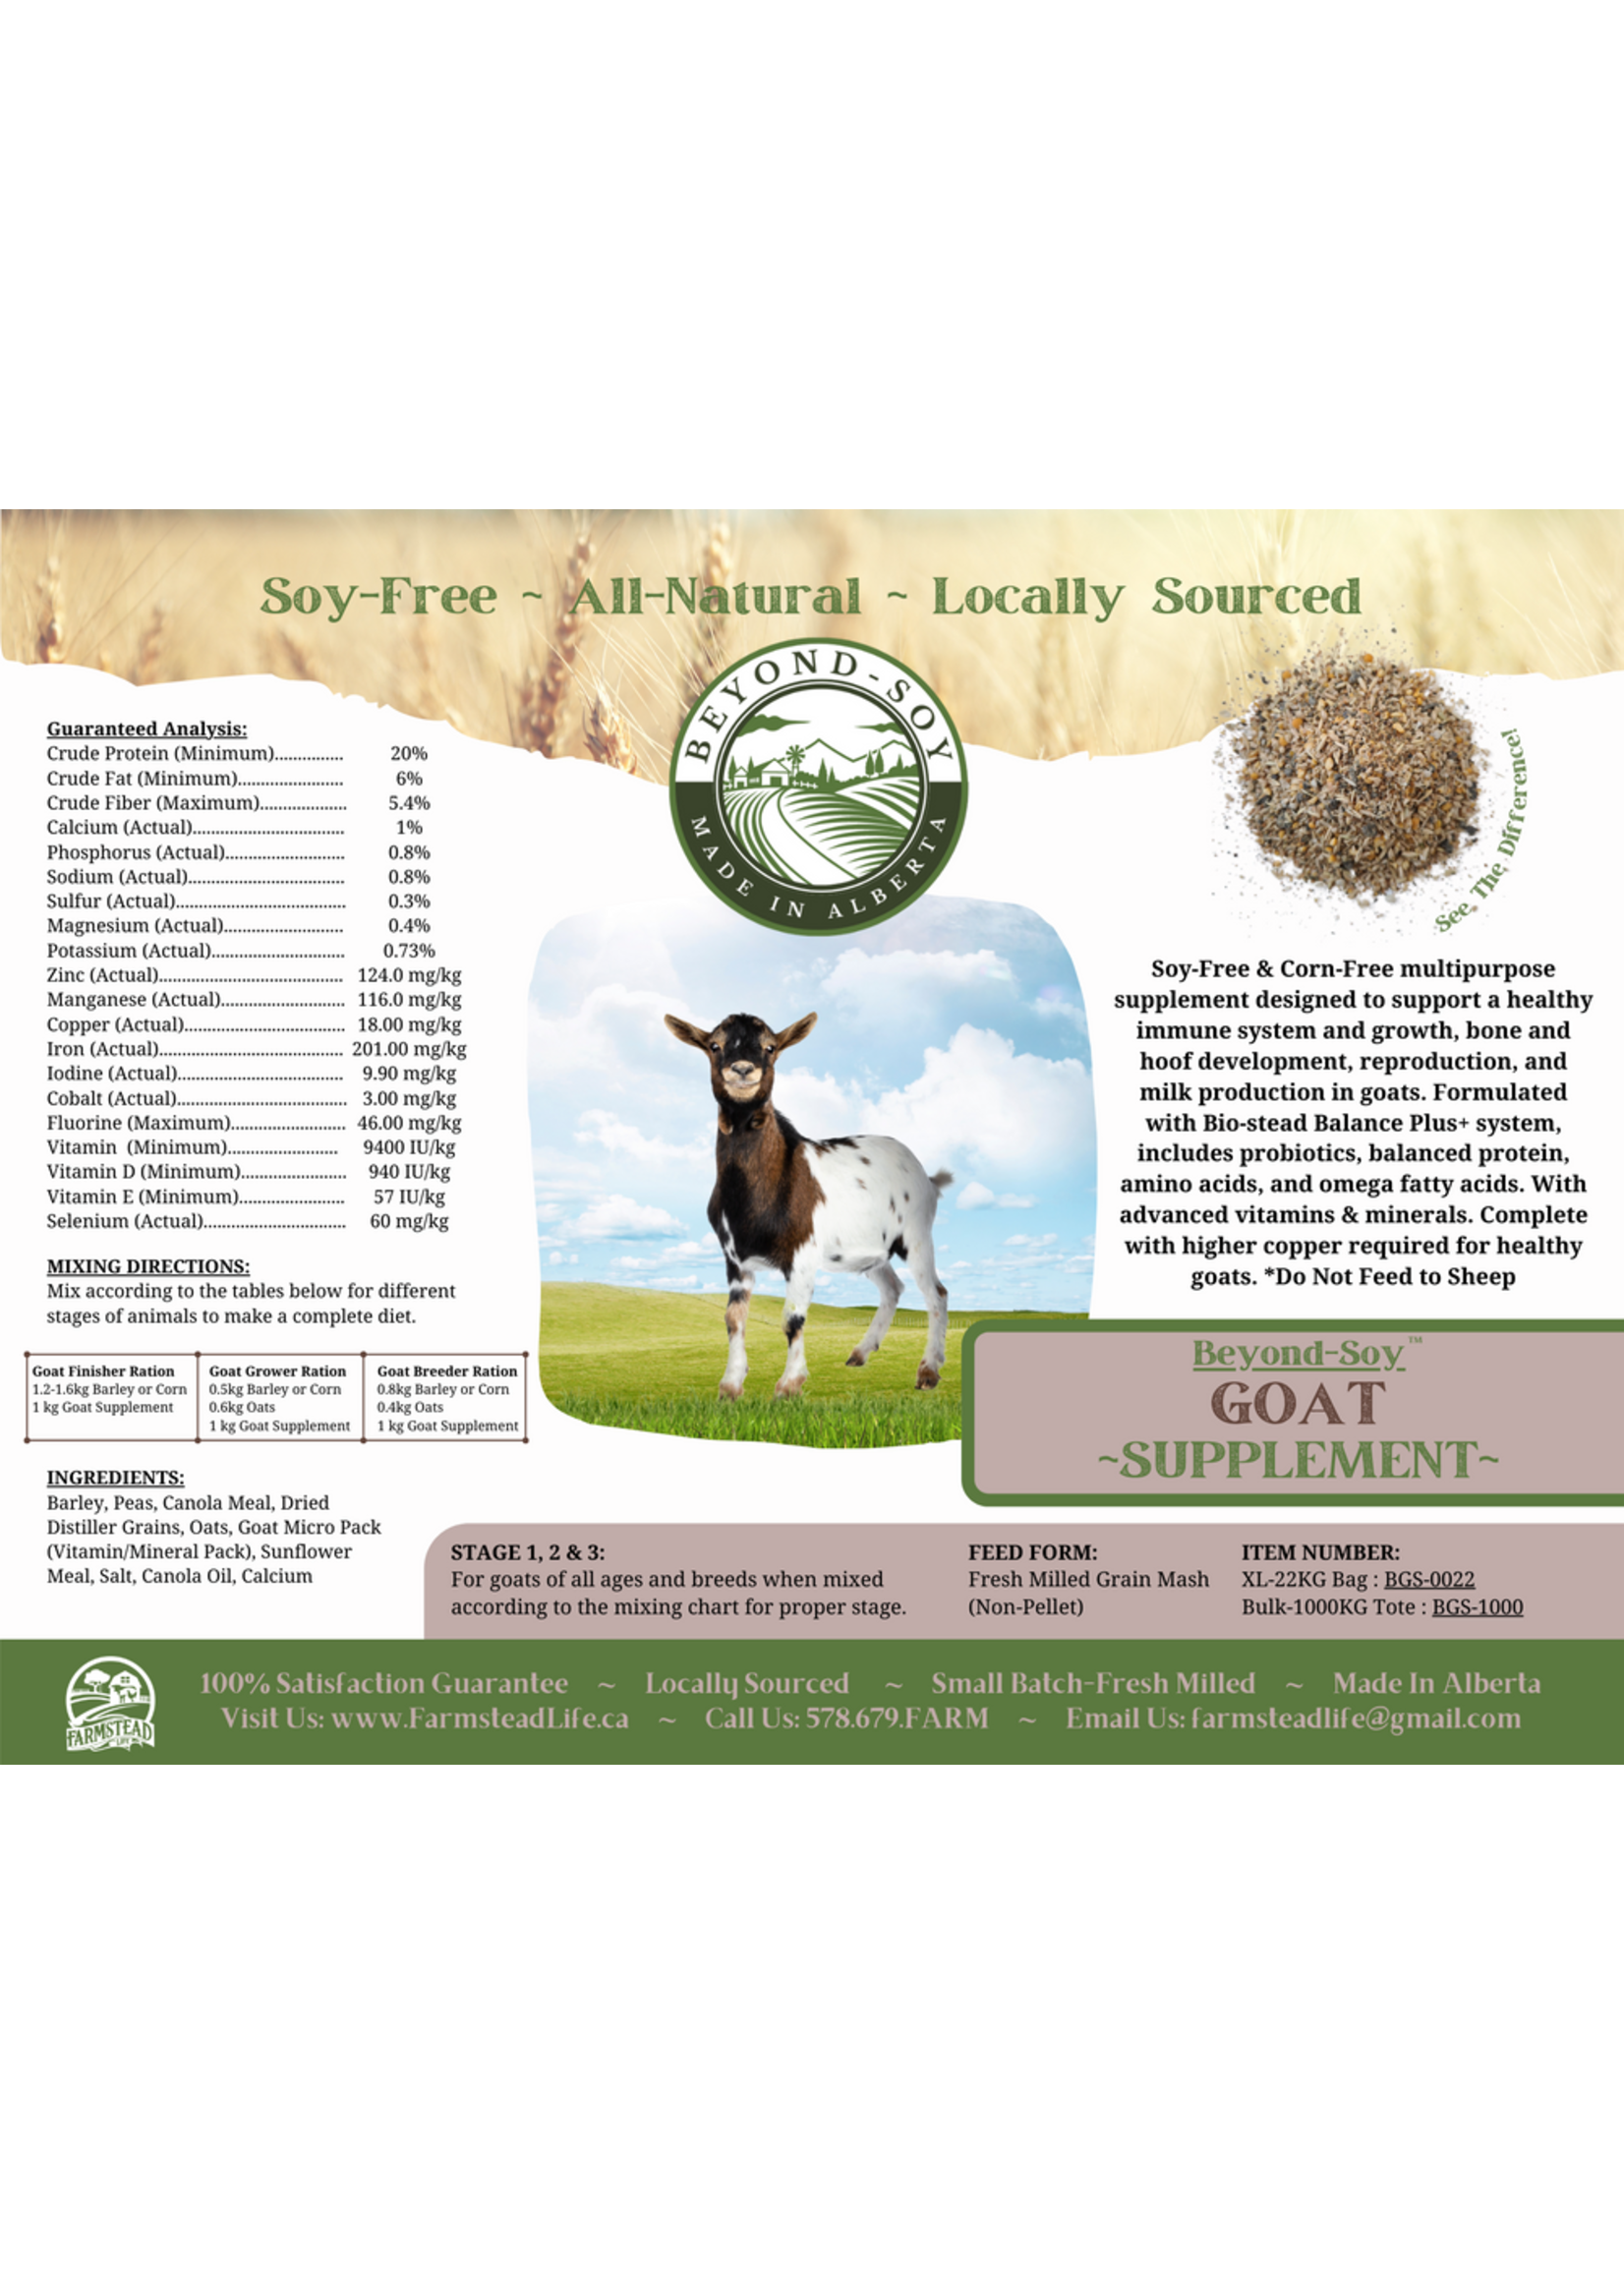 Farmstead Life FSL - SOY-FREE - Goat Supplement - 22 kg